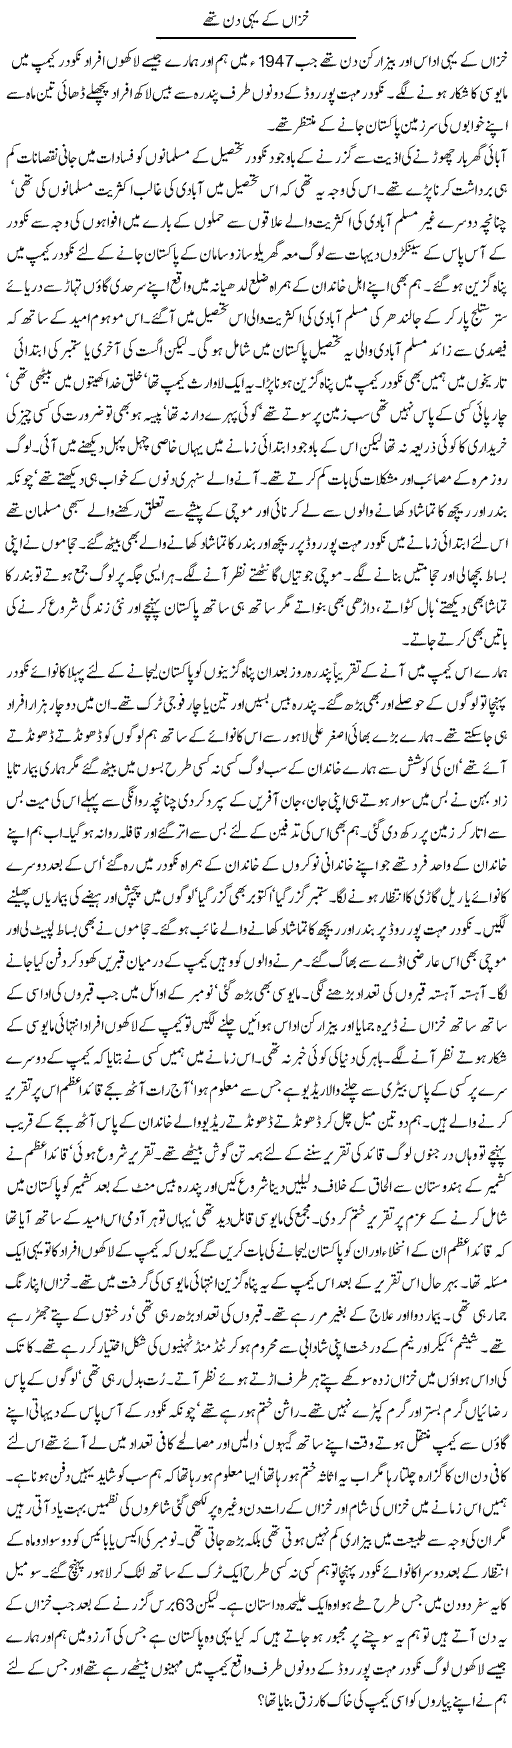 These Days of Khazan Express Column Hameed Akhtar 12 November 2010